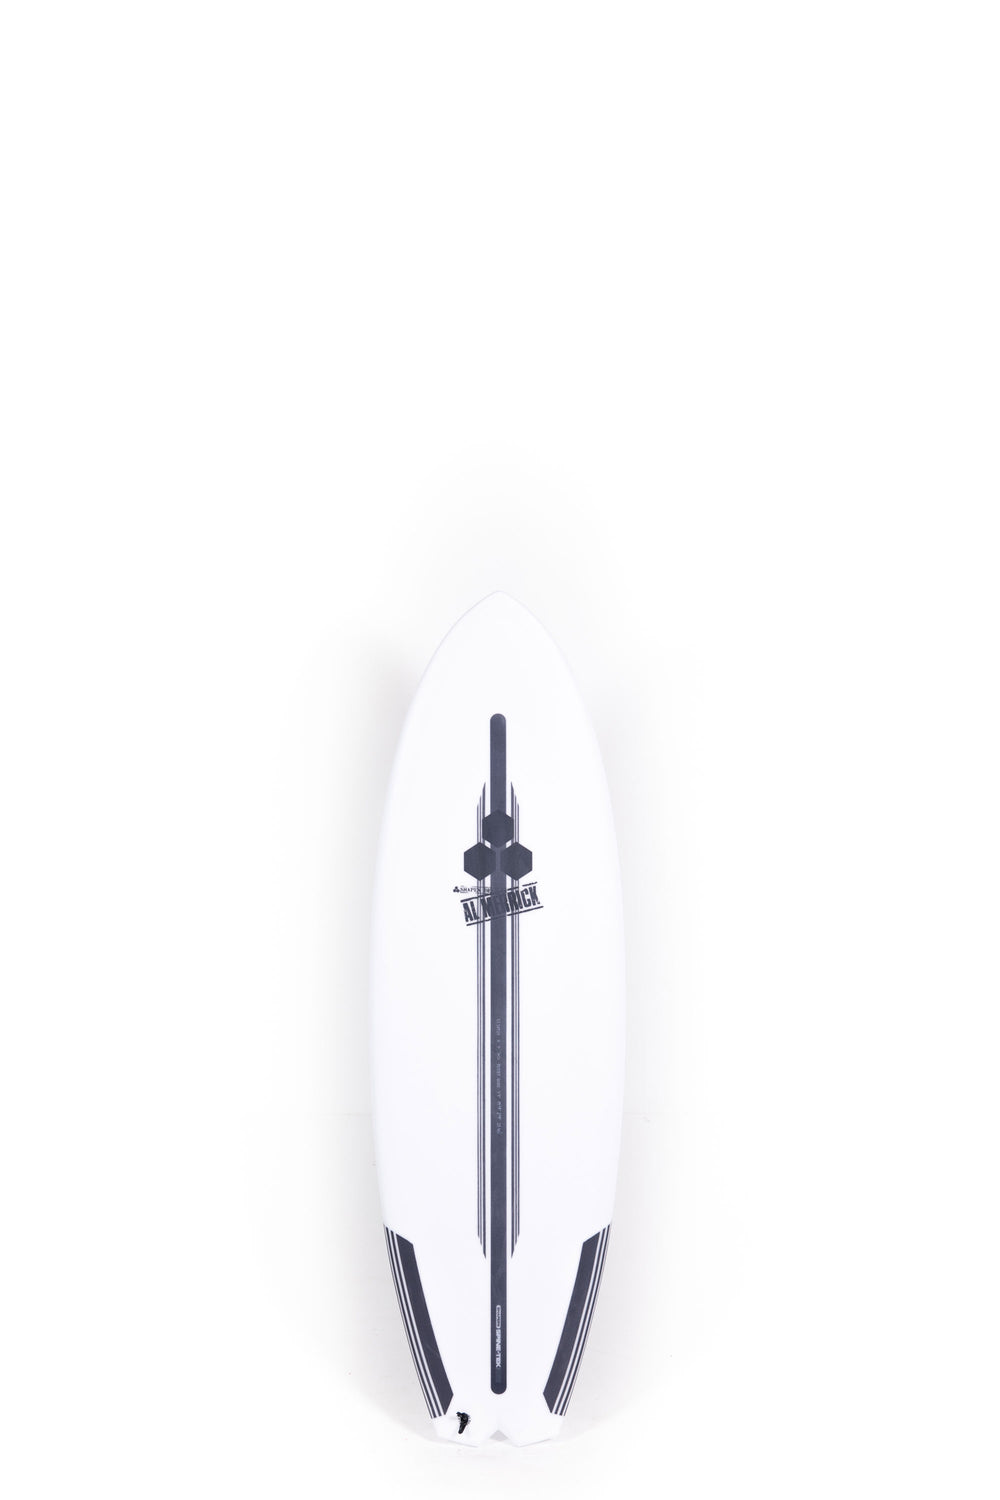 Pukas Surf Shop Channel Islands Surfboards Bobby Quad 5'4